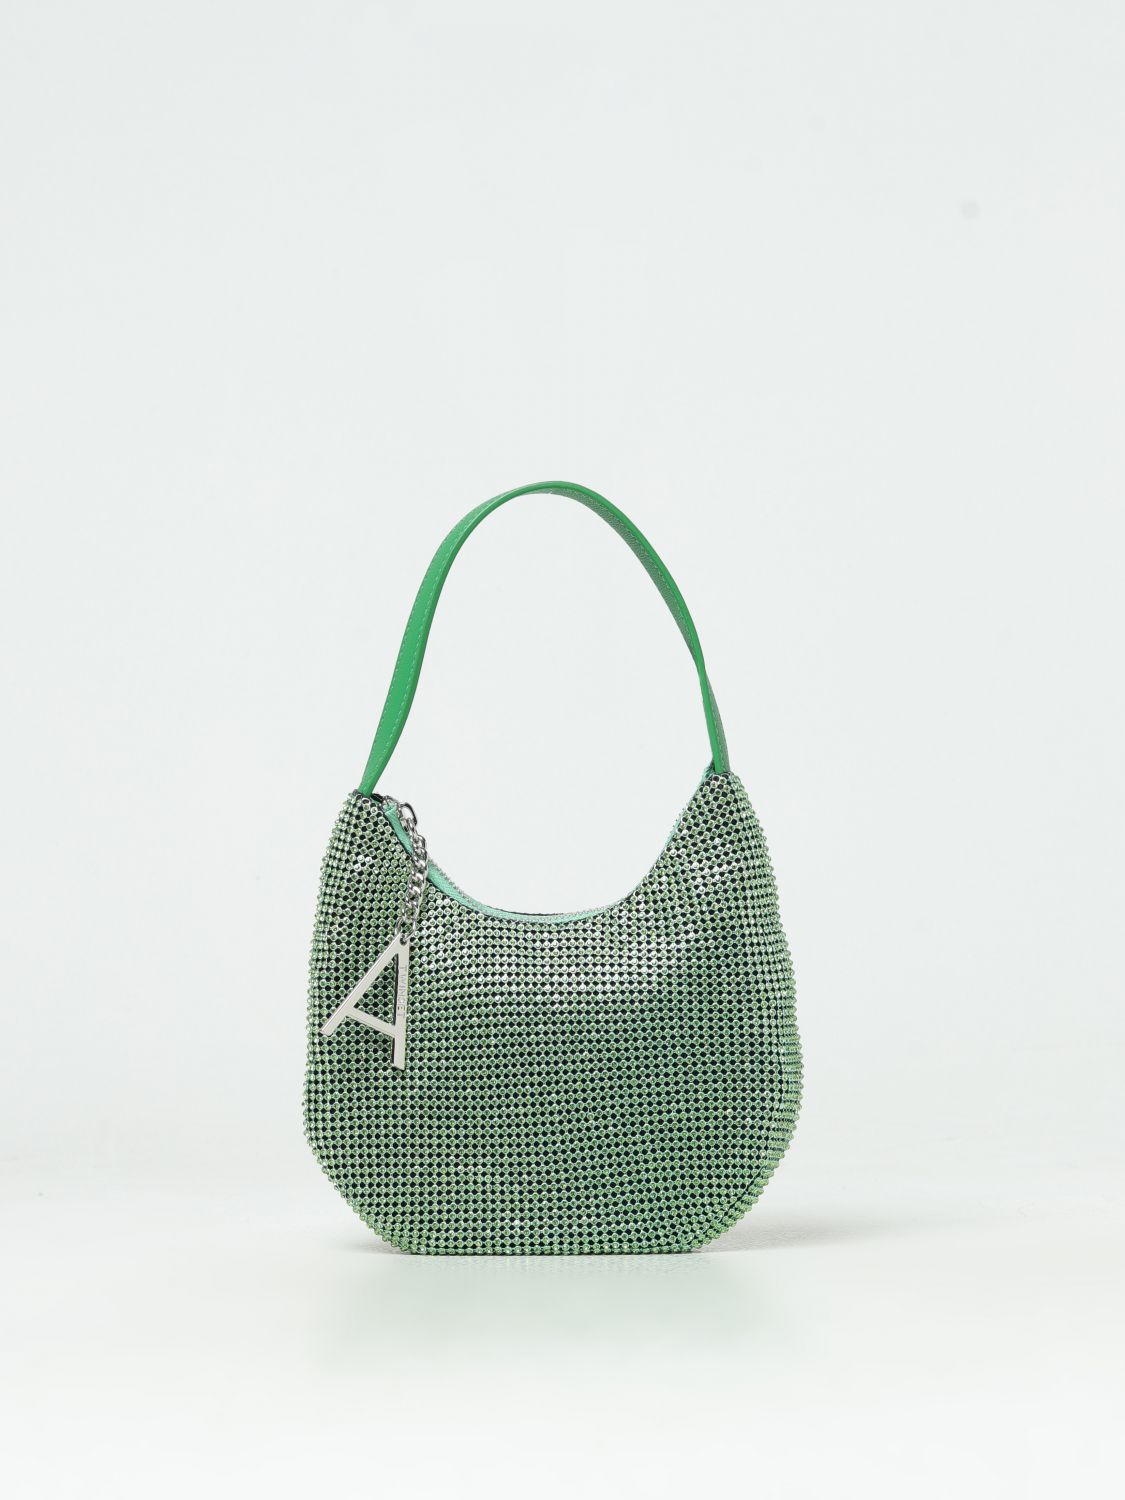 Shop Actitude Twinset Shoulder Bag  Woman Color Green